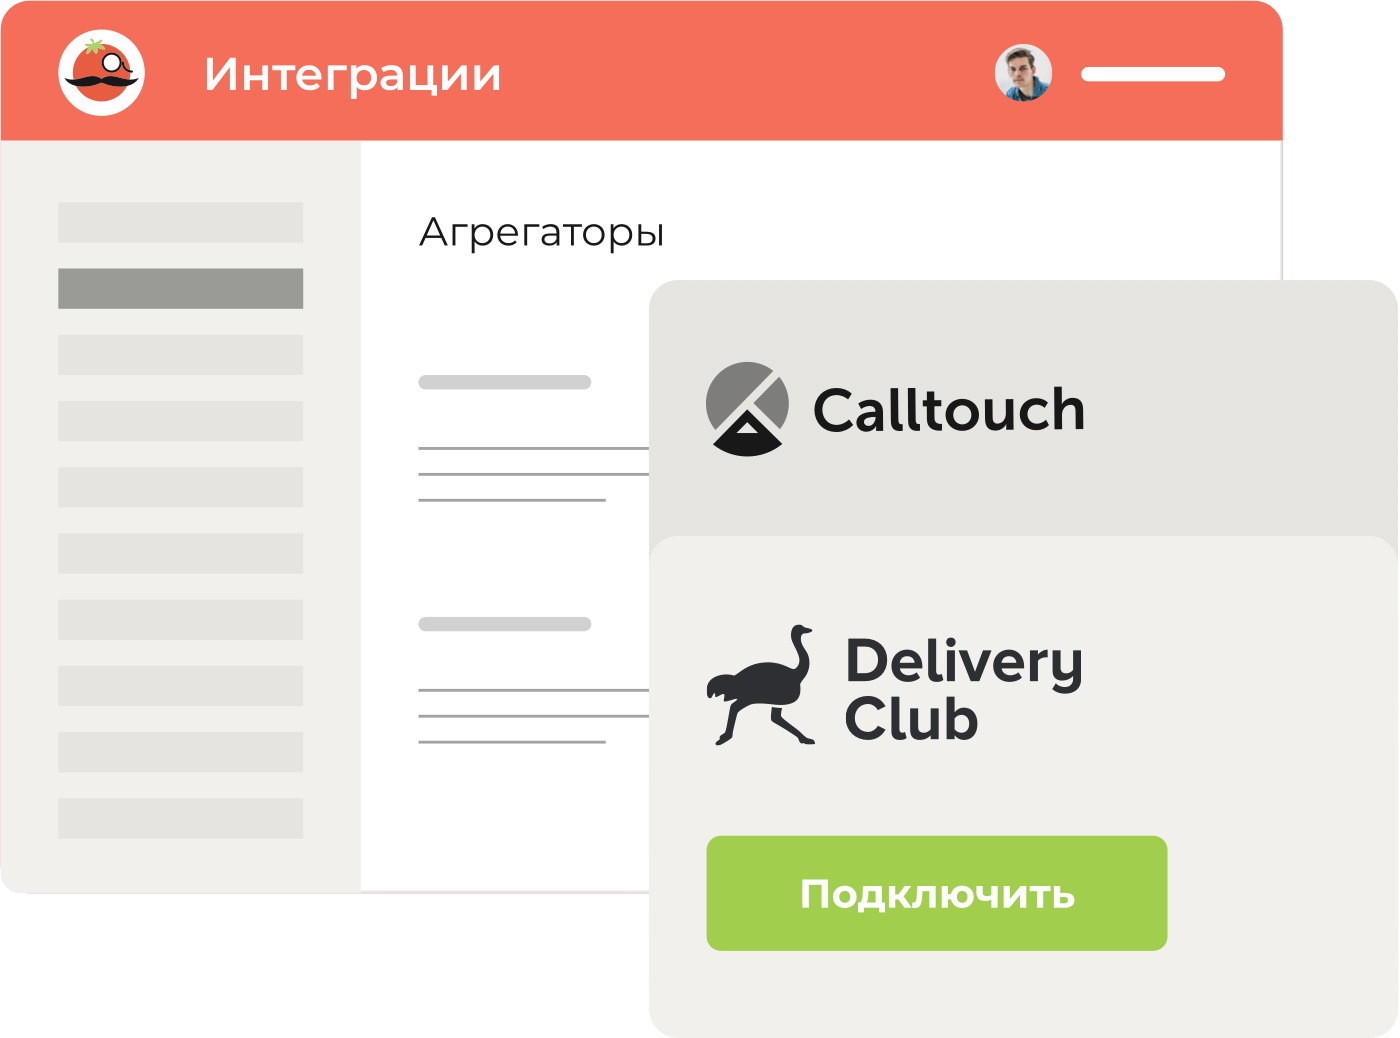 Новая интеграция с Delivery Club и интеграция с Calltouch